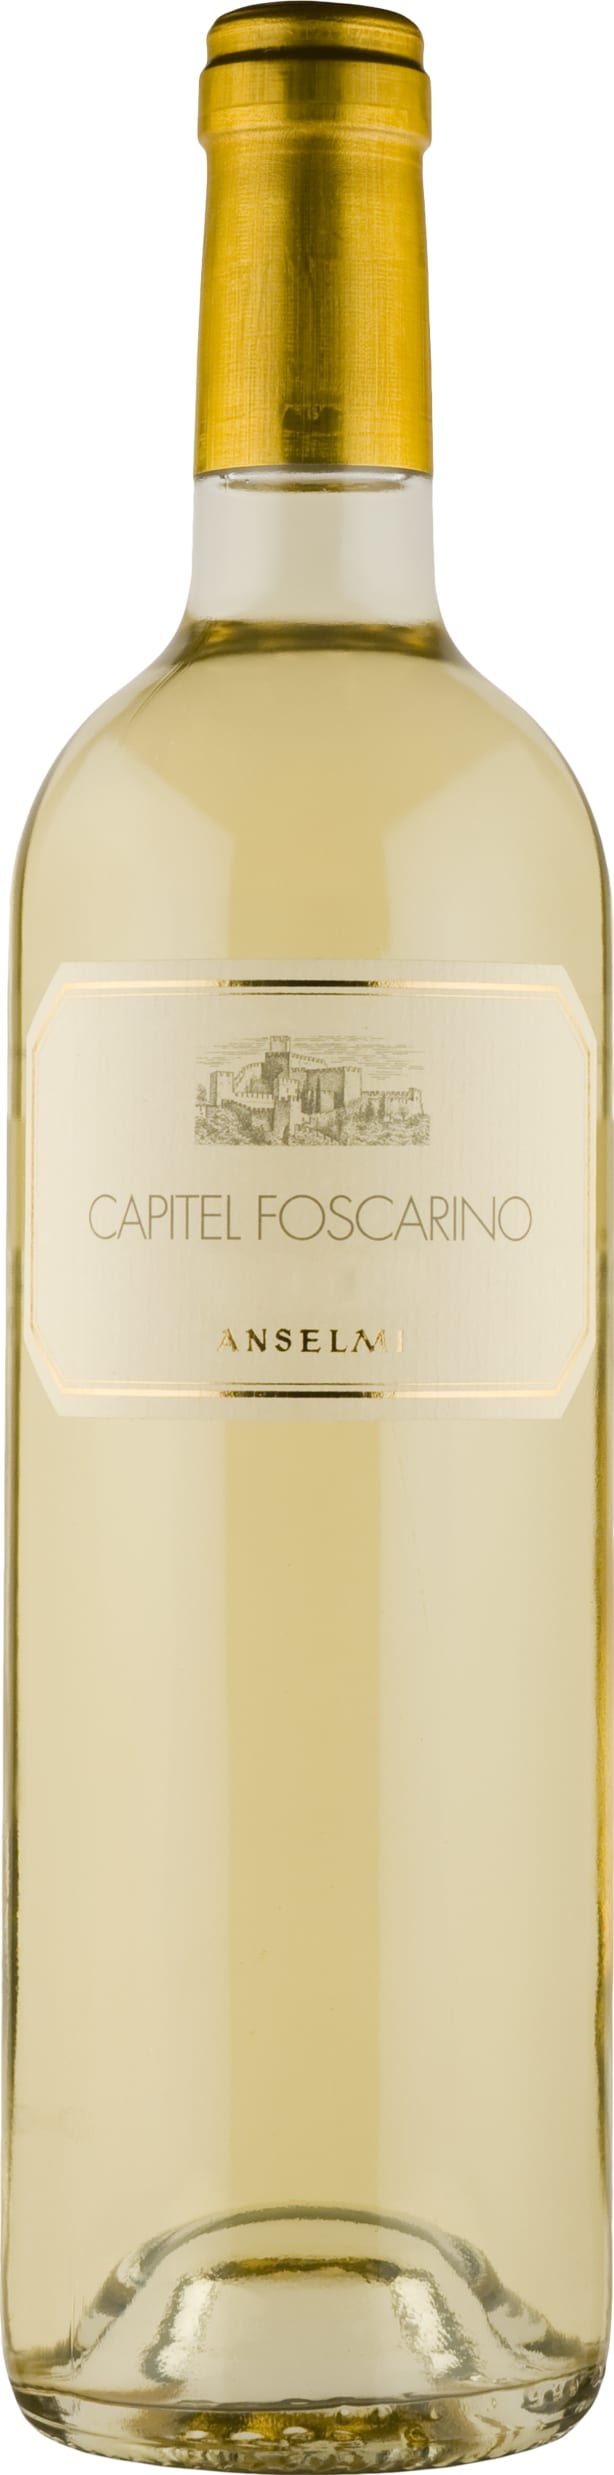 Anselmi Capitel Foscarino IGT 2022 75cl - Buy Anselmi Wines from GREAT WINES DIRECT wine shop